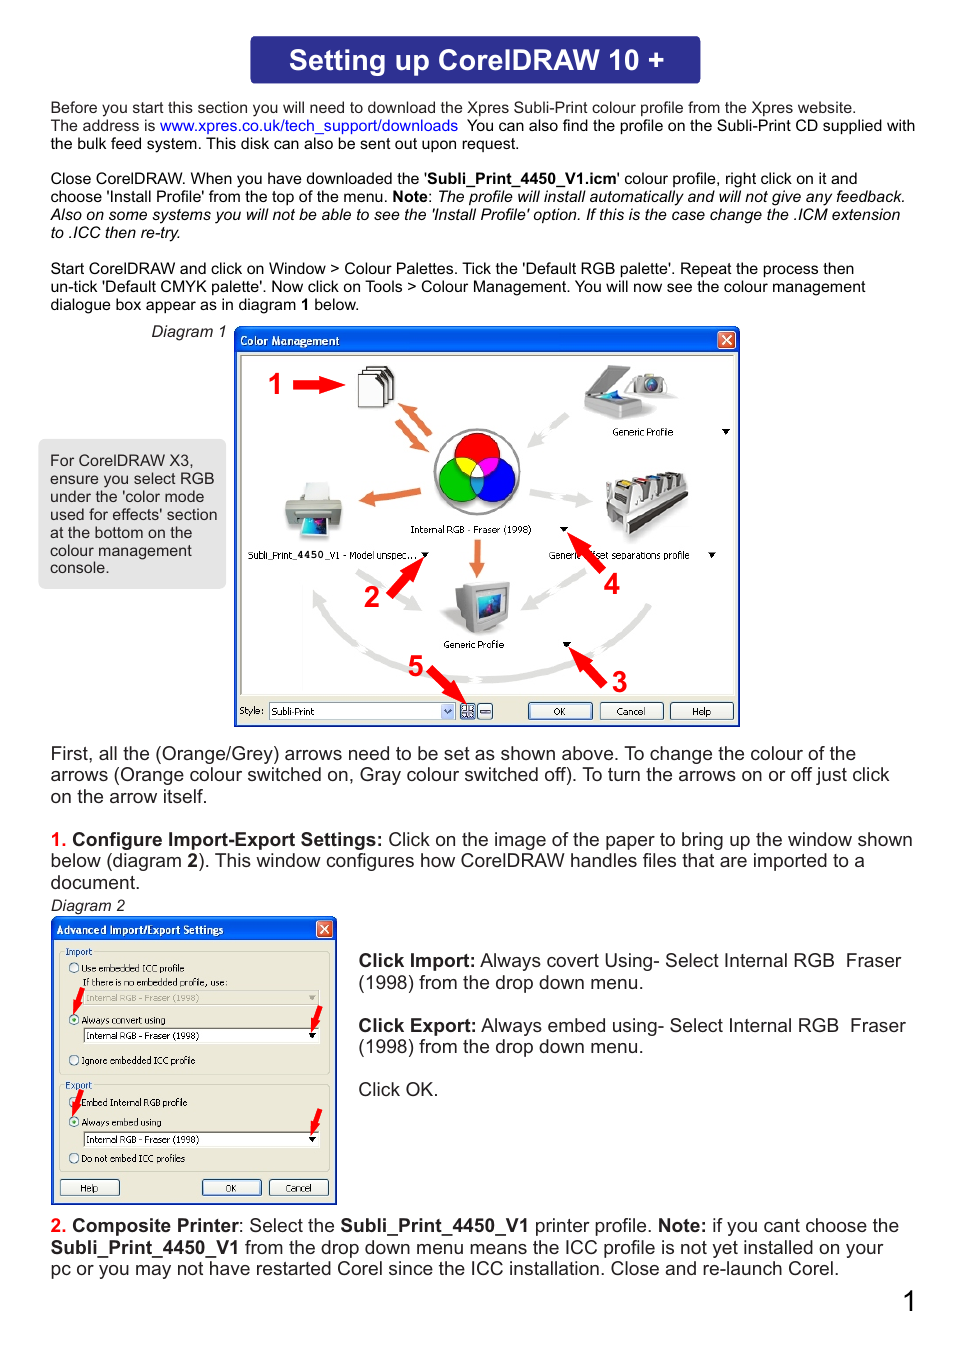 Subli-Print Epson 4450 Pro: CorelDRAW 10+ Instructions